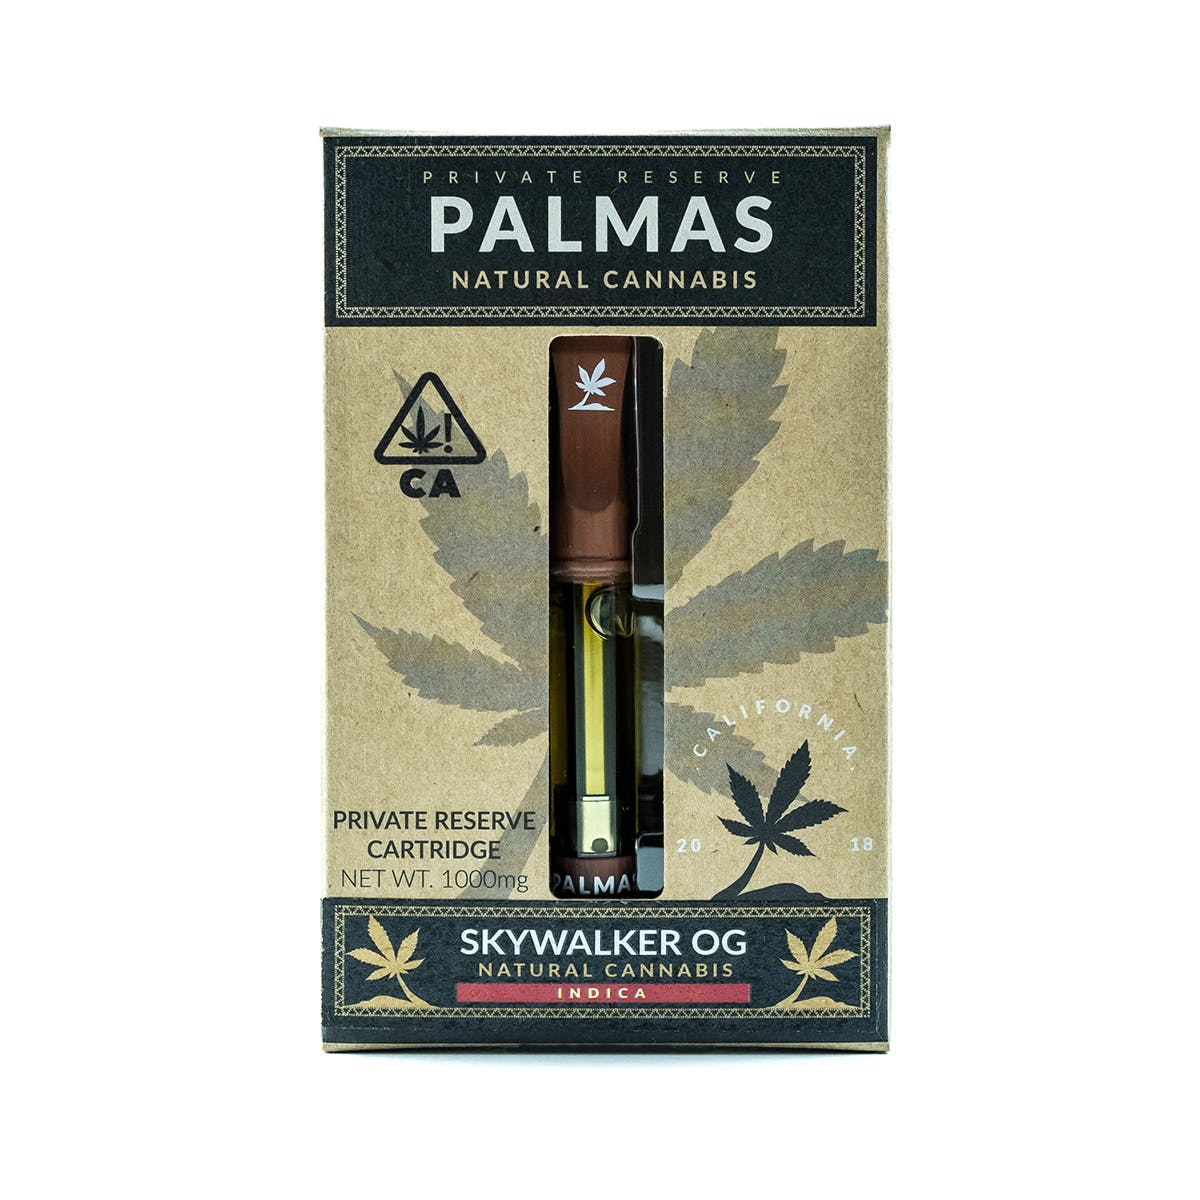 marijuana-dispensaries-kush-club-20-in-los-angeles-palmas-private-reserve-cartridge-skywalker-og